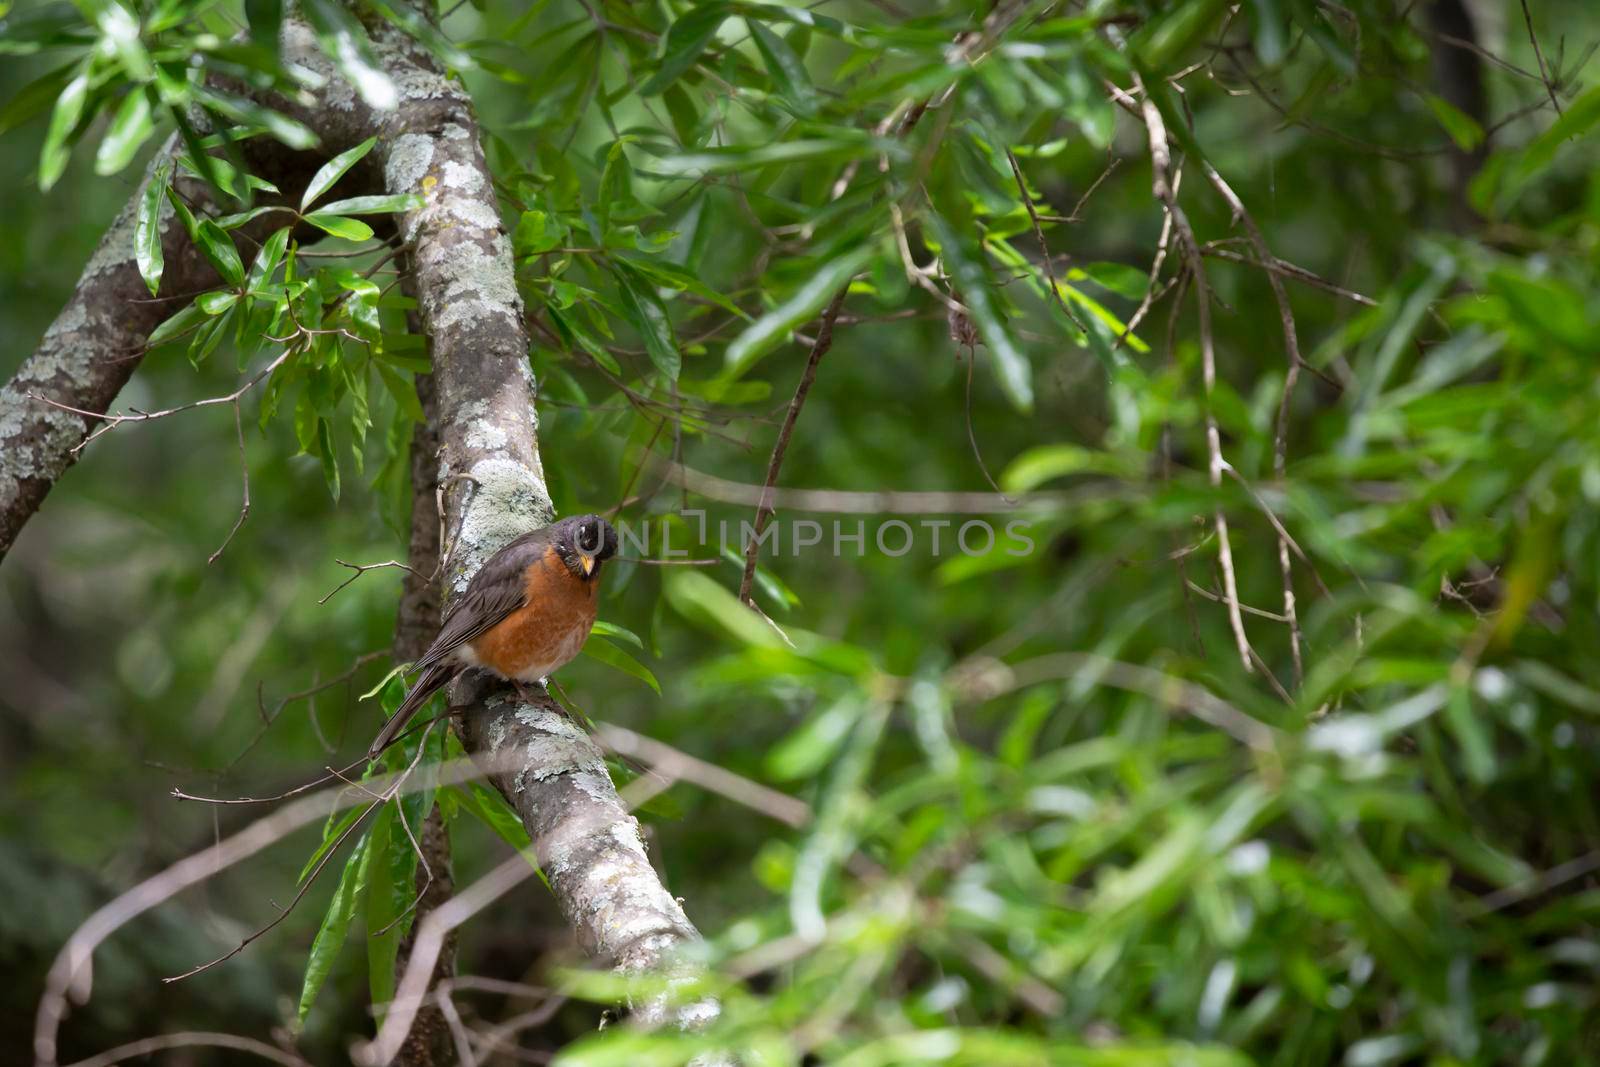 Inquisitive American robin (Turdus migratorius) perched on a tree limb